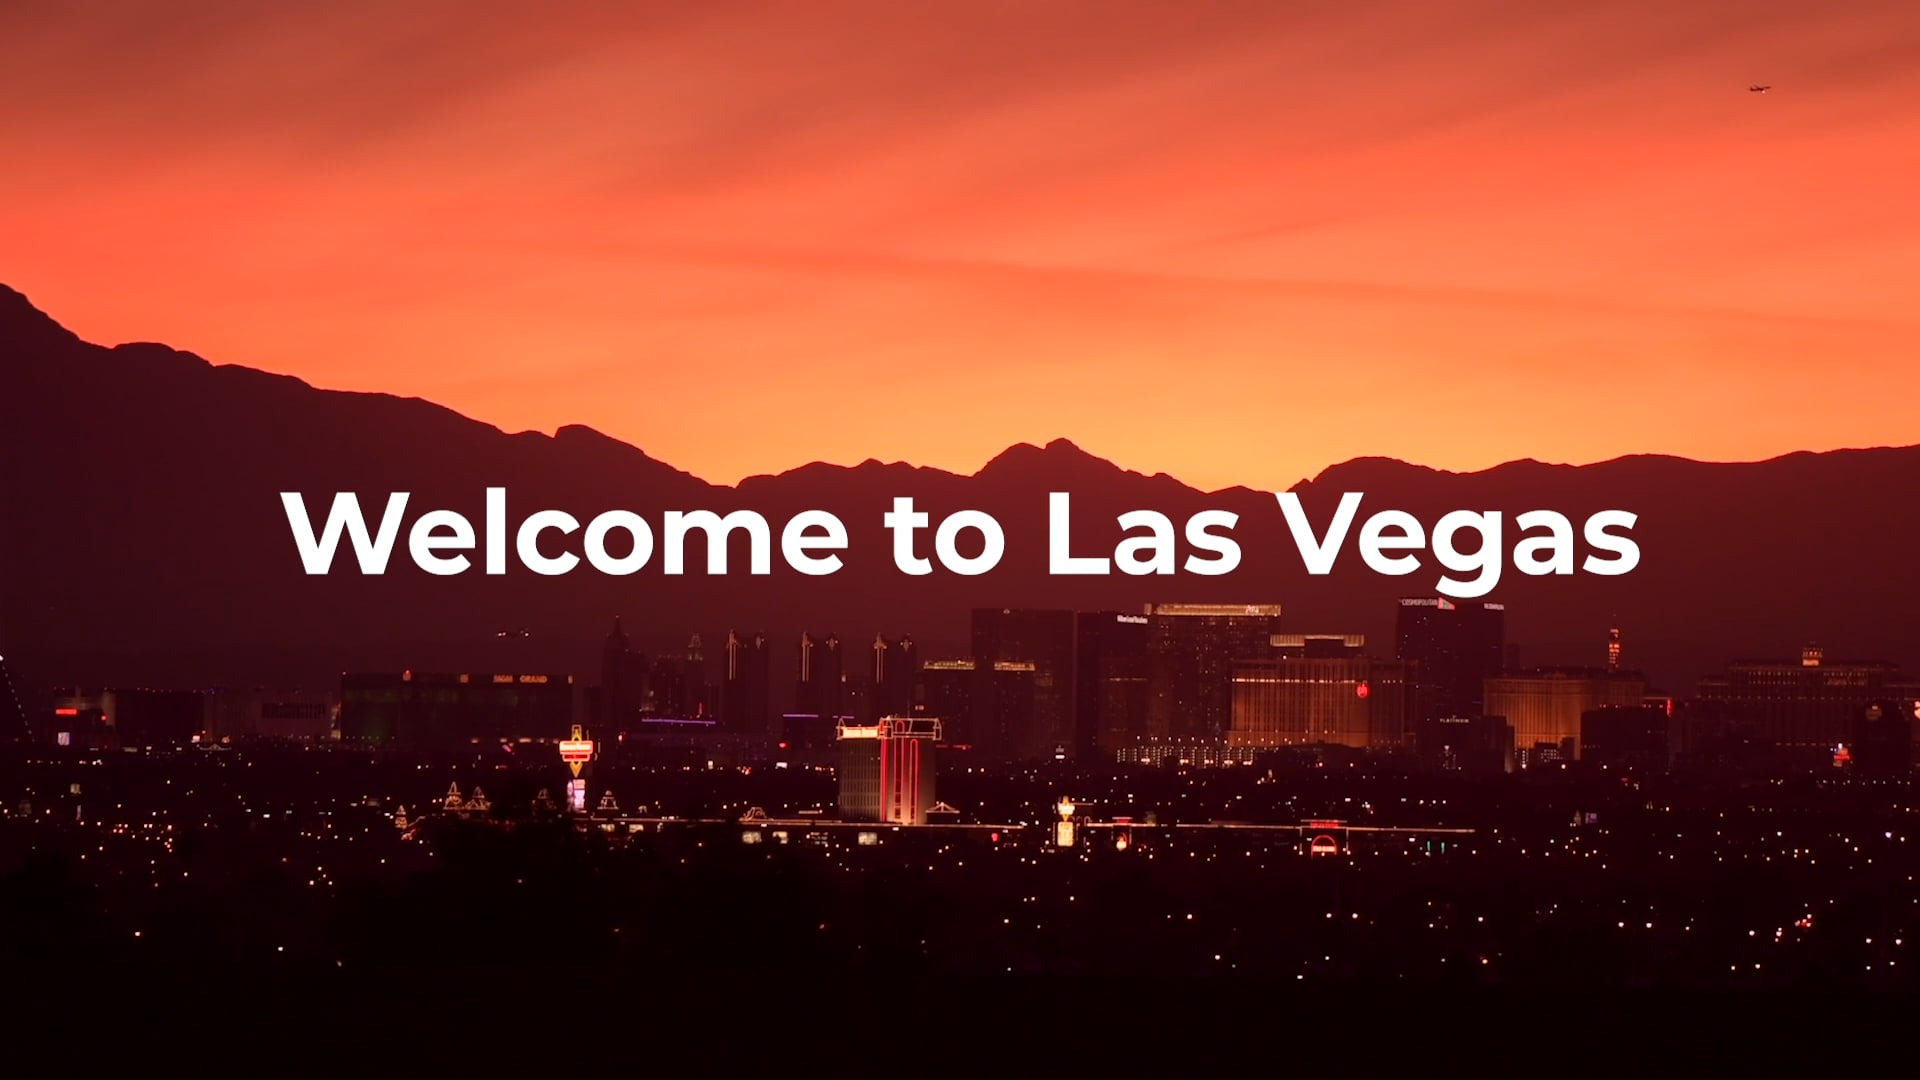 Registration Open for NECA 2019 Las Vegas